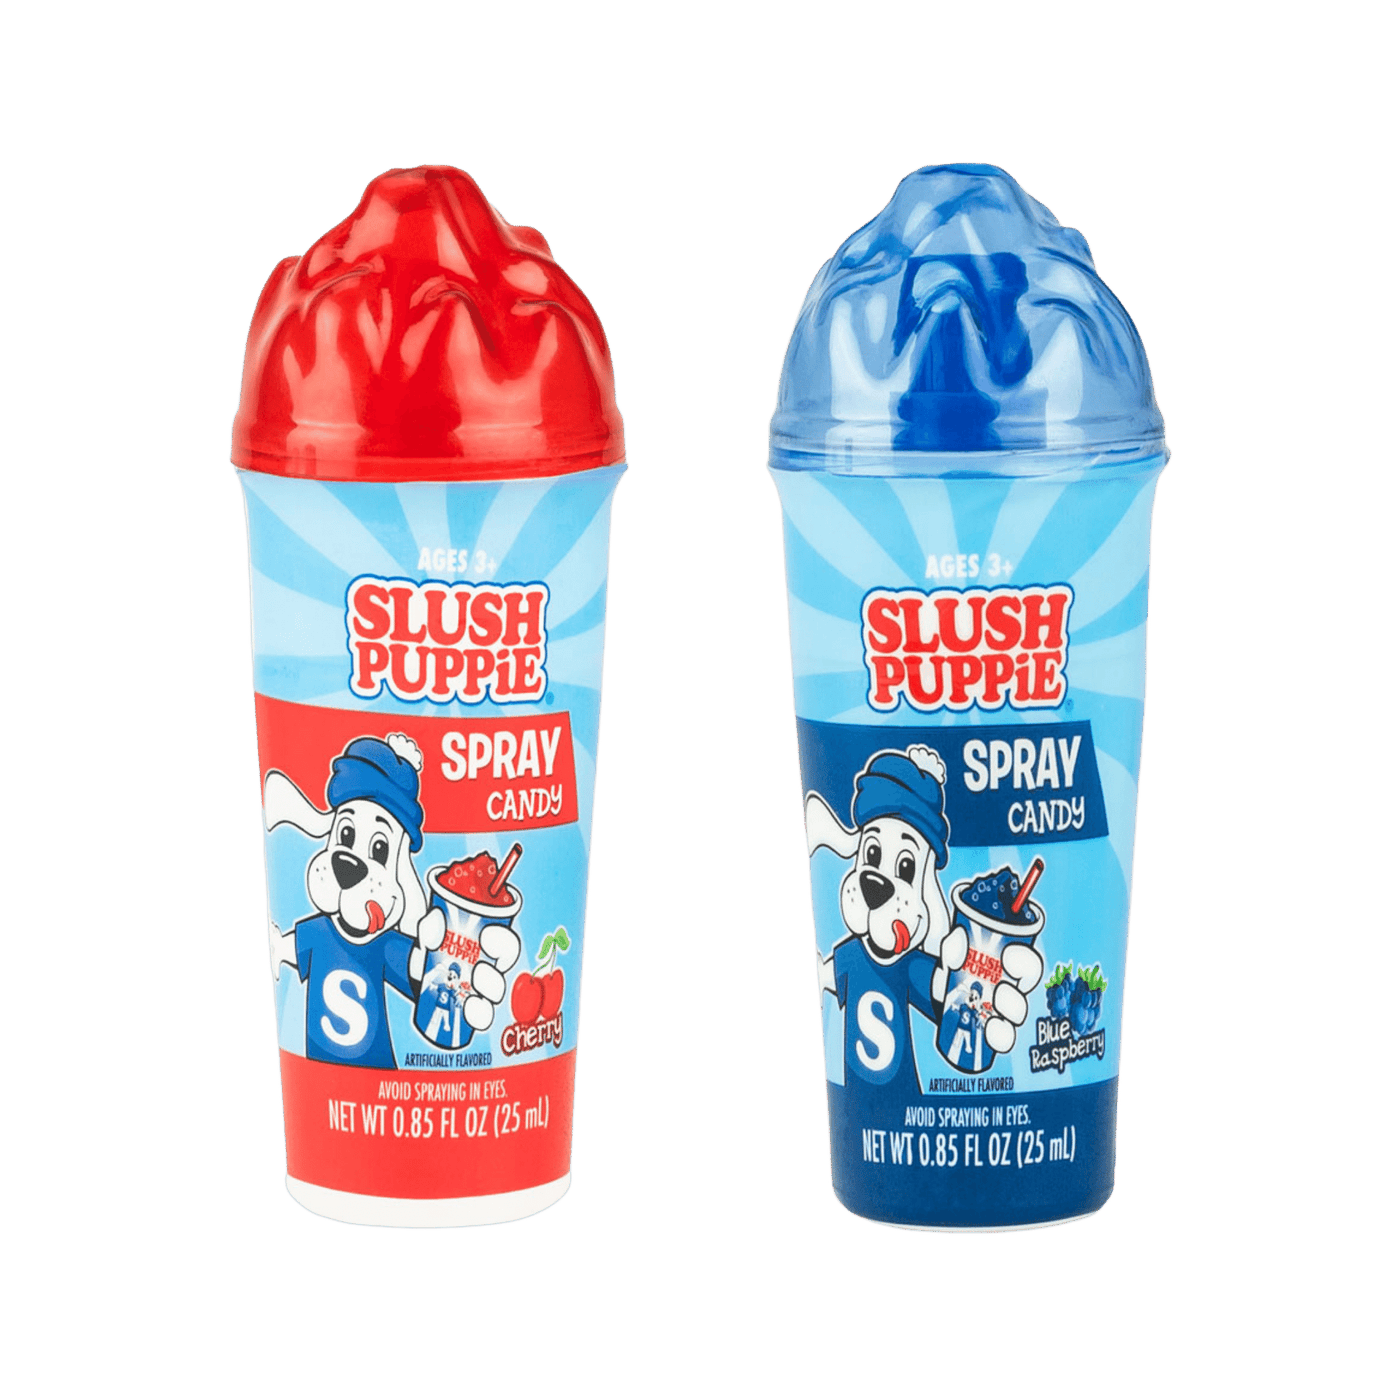 Koko's Slush Puppie Spray Candy